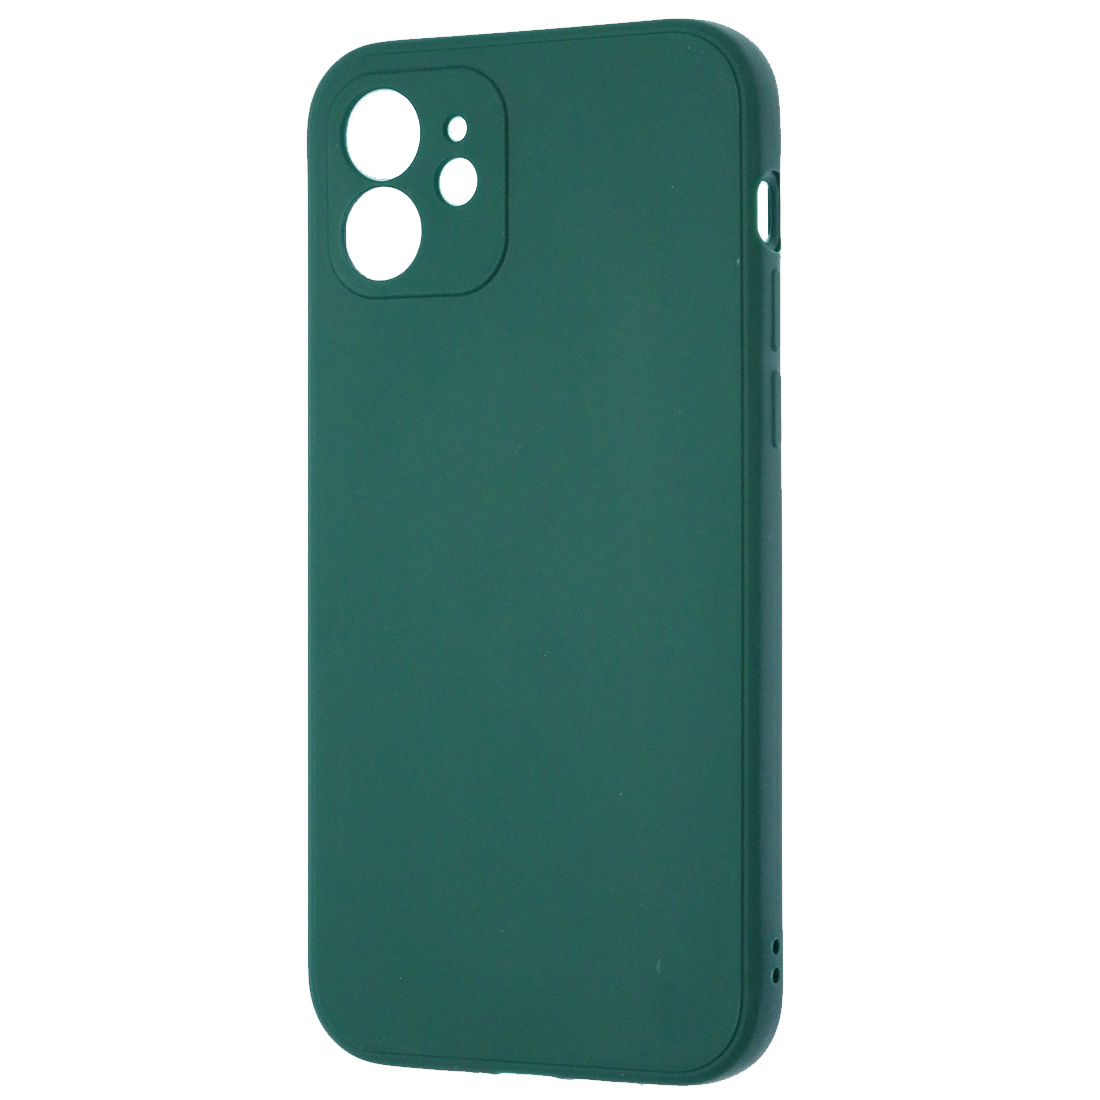 Чехол накладка для APPLE iPhone 12, силикон, бархат, цвет темно зеленый